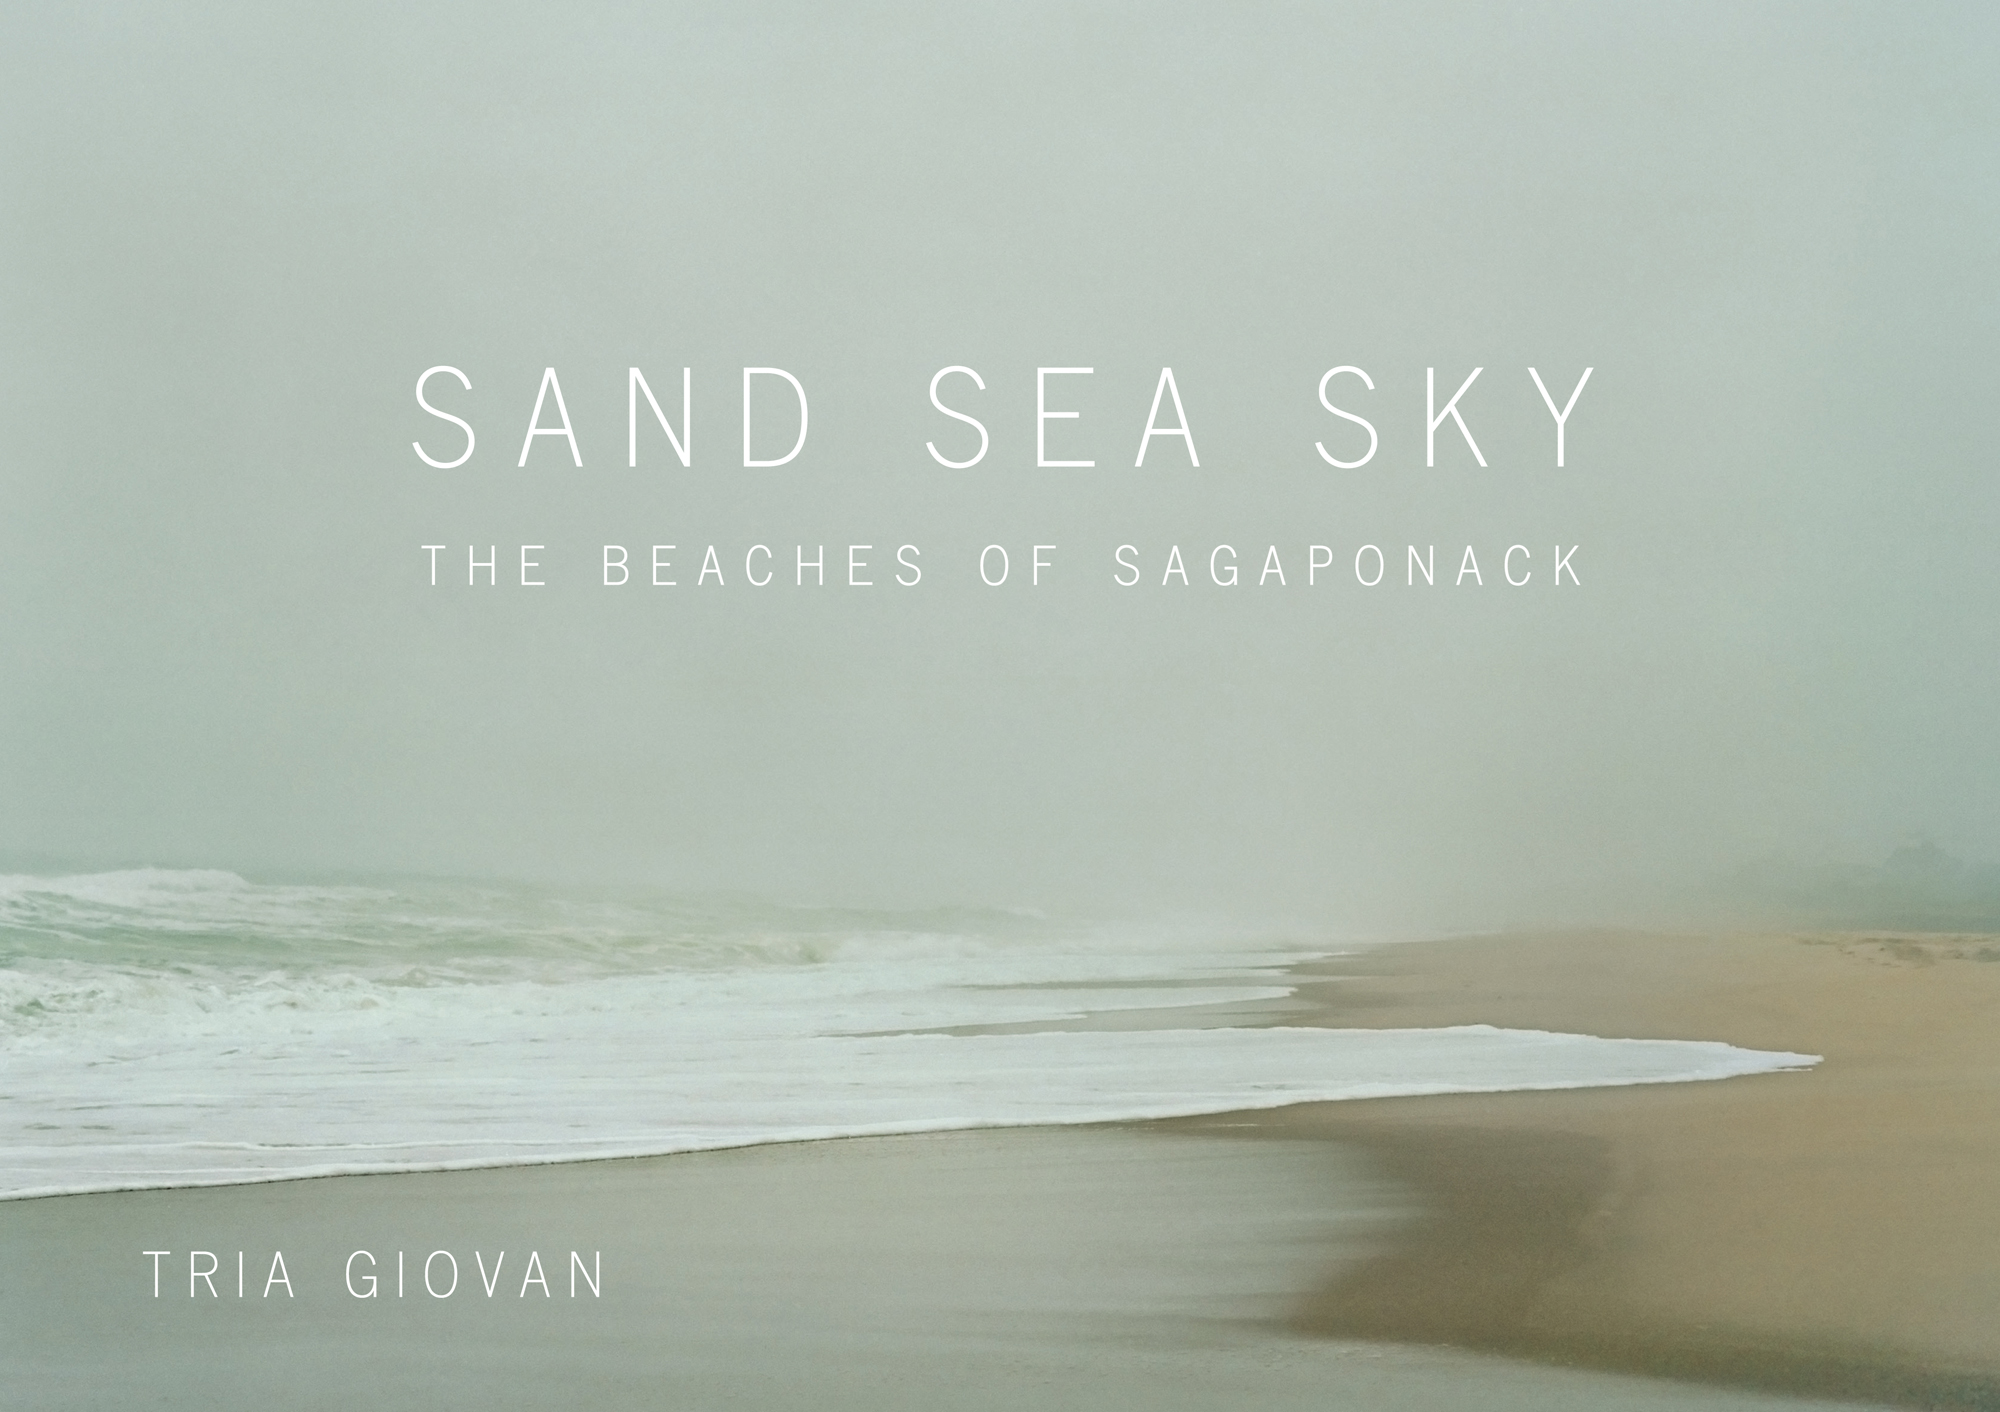 Sand_Sea_Sky_cover_w2000px.jpg